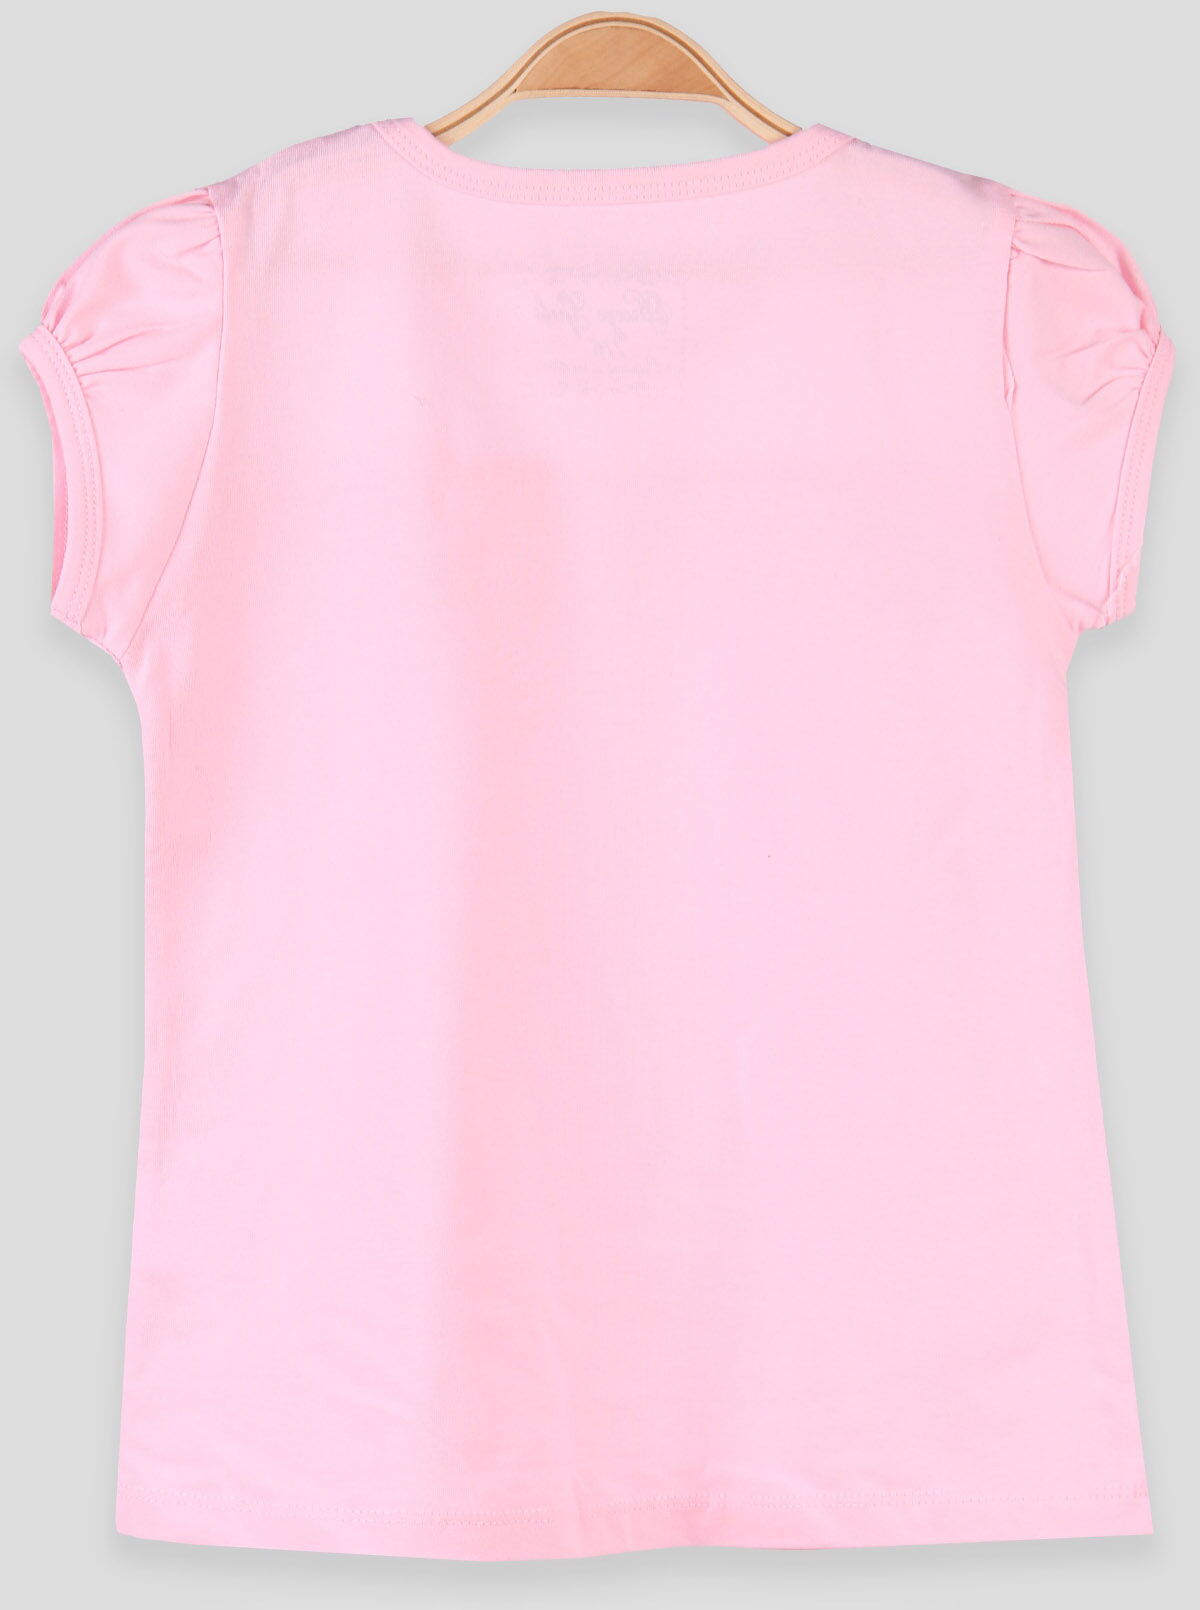 Трикотажная блузка для девочки Breeze розовая 14516 - фото